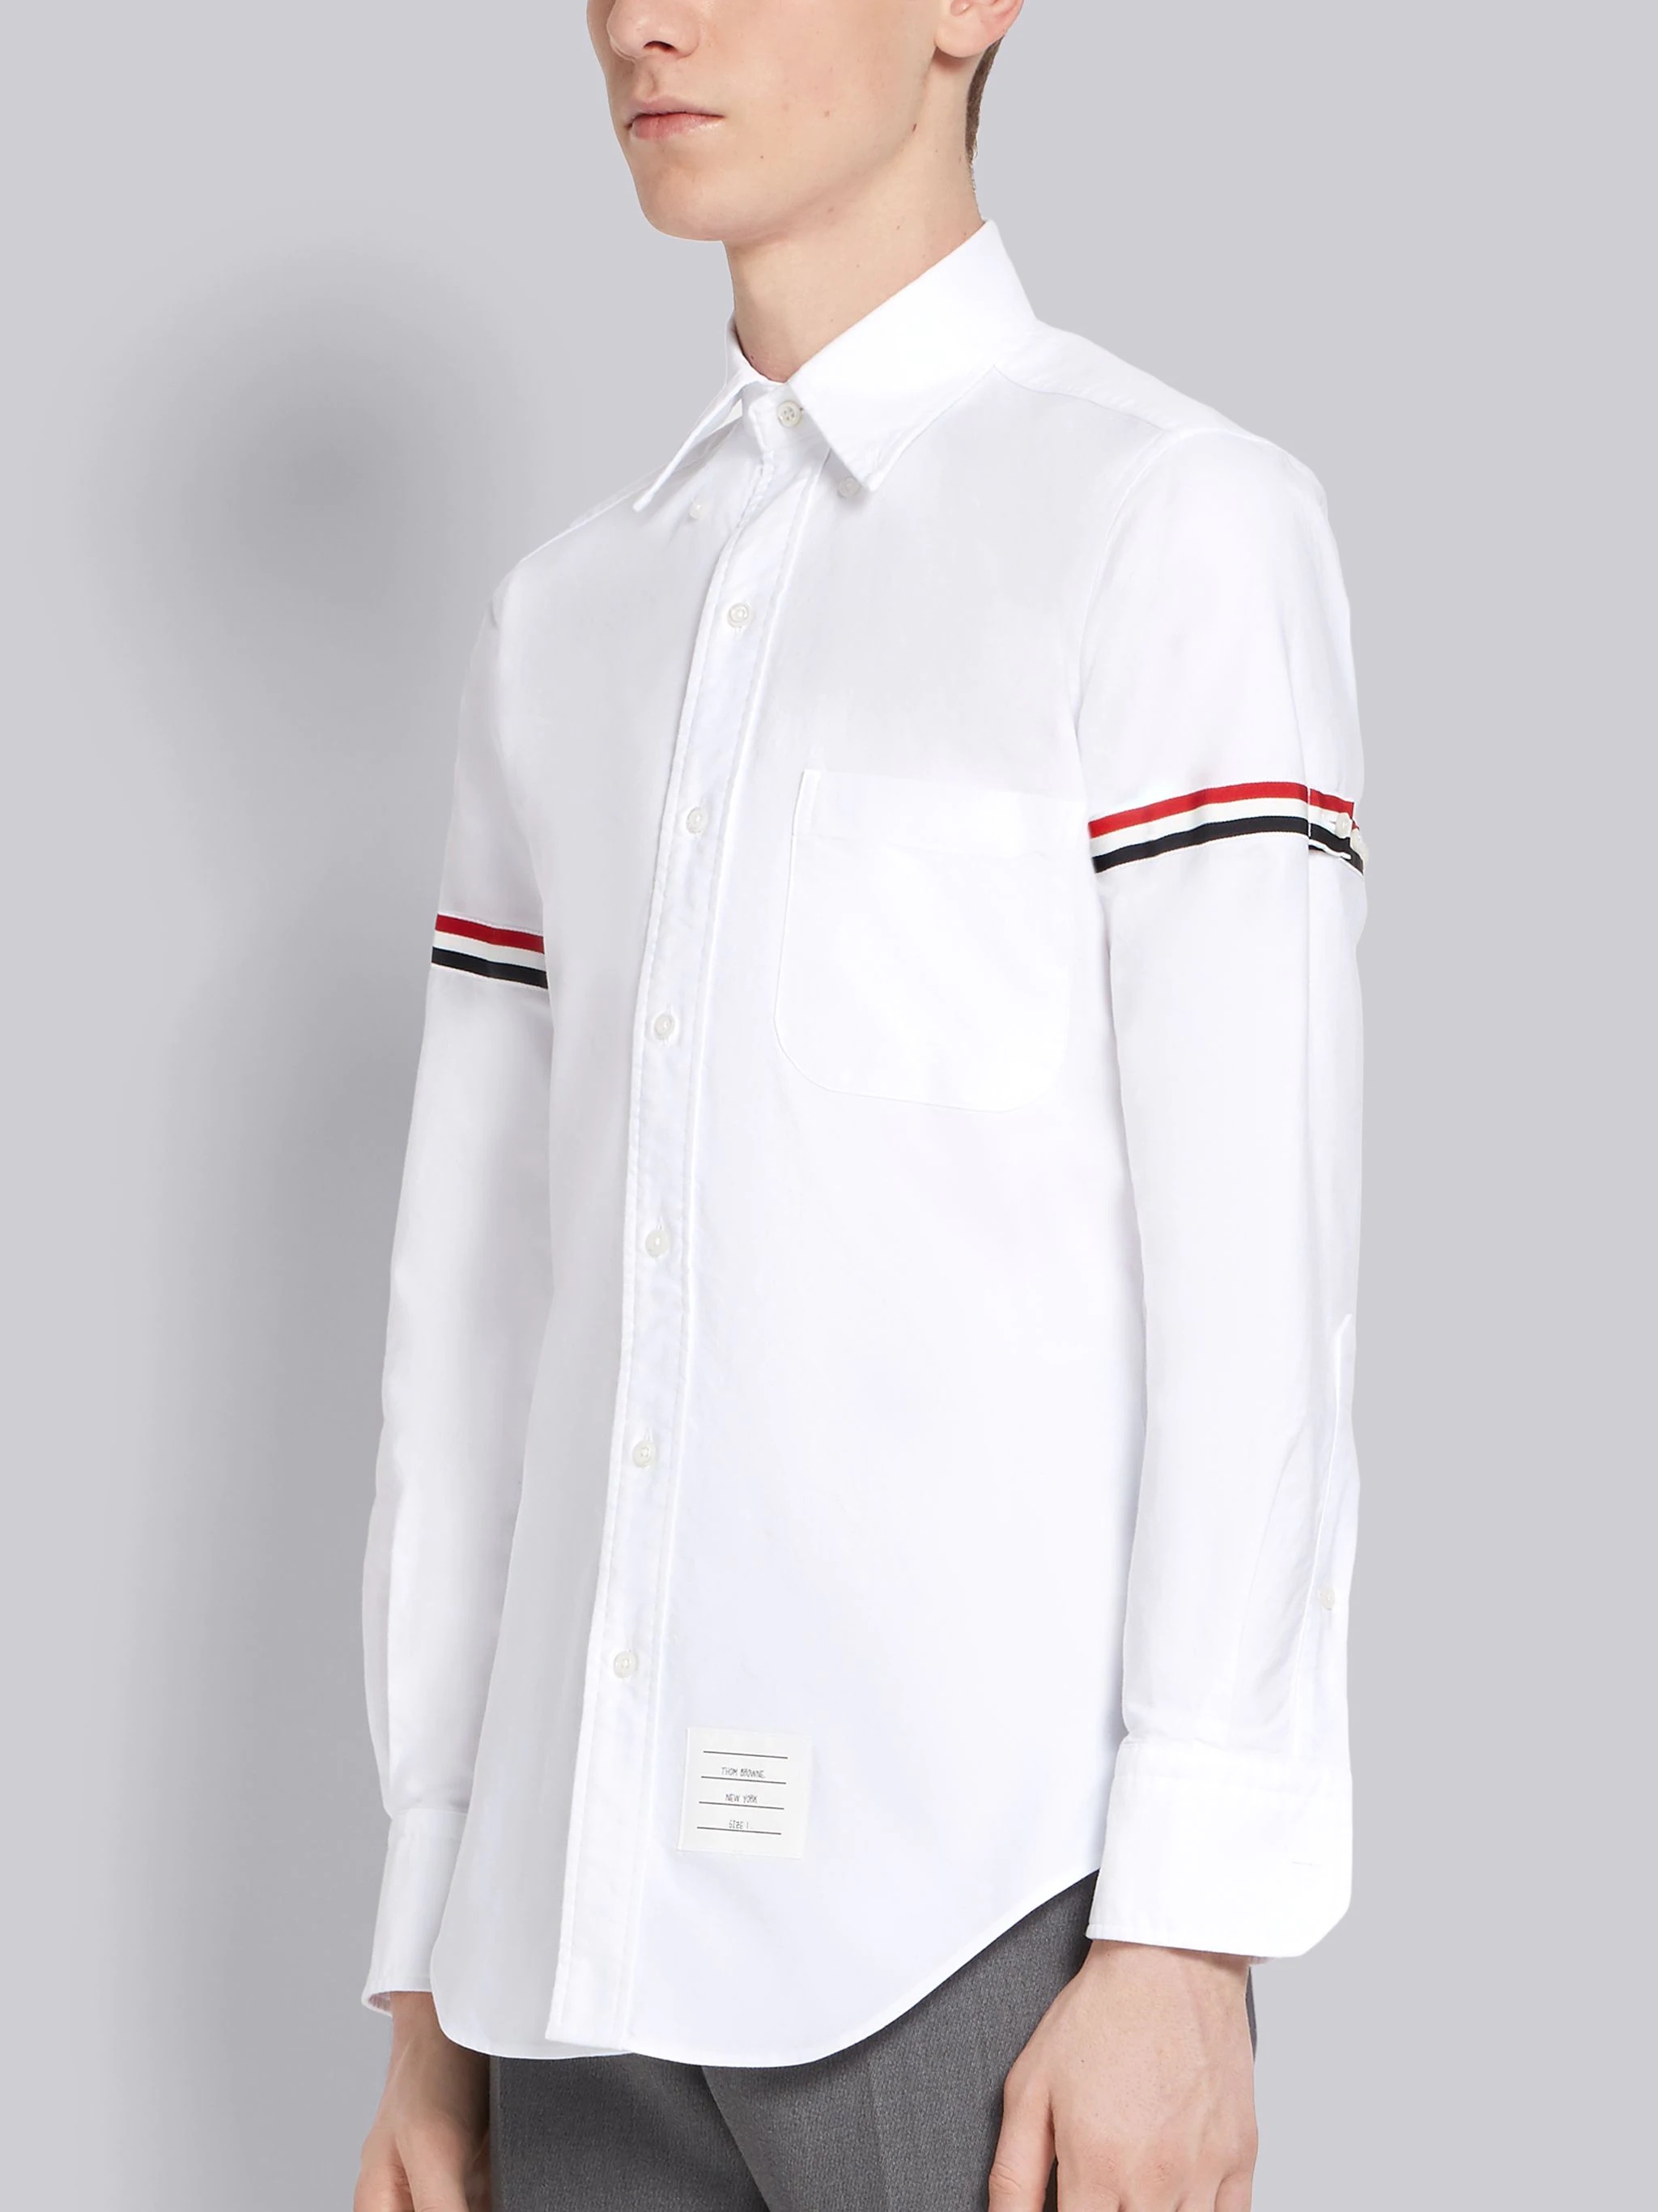 White Oxford Striped Grosgrain Armband Classic Shirt - 2